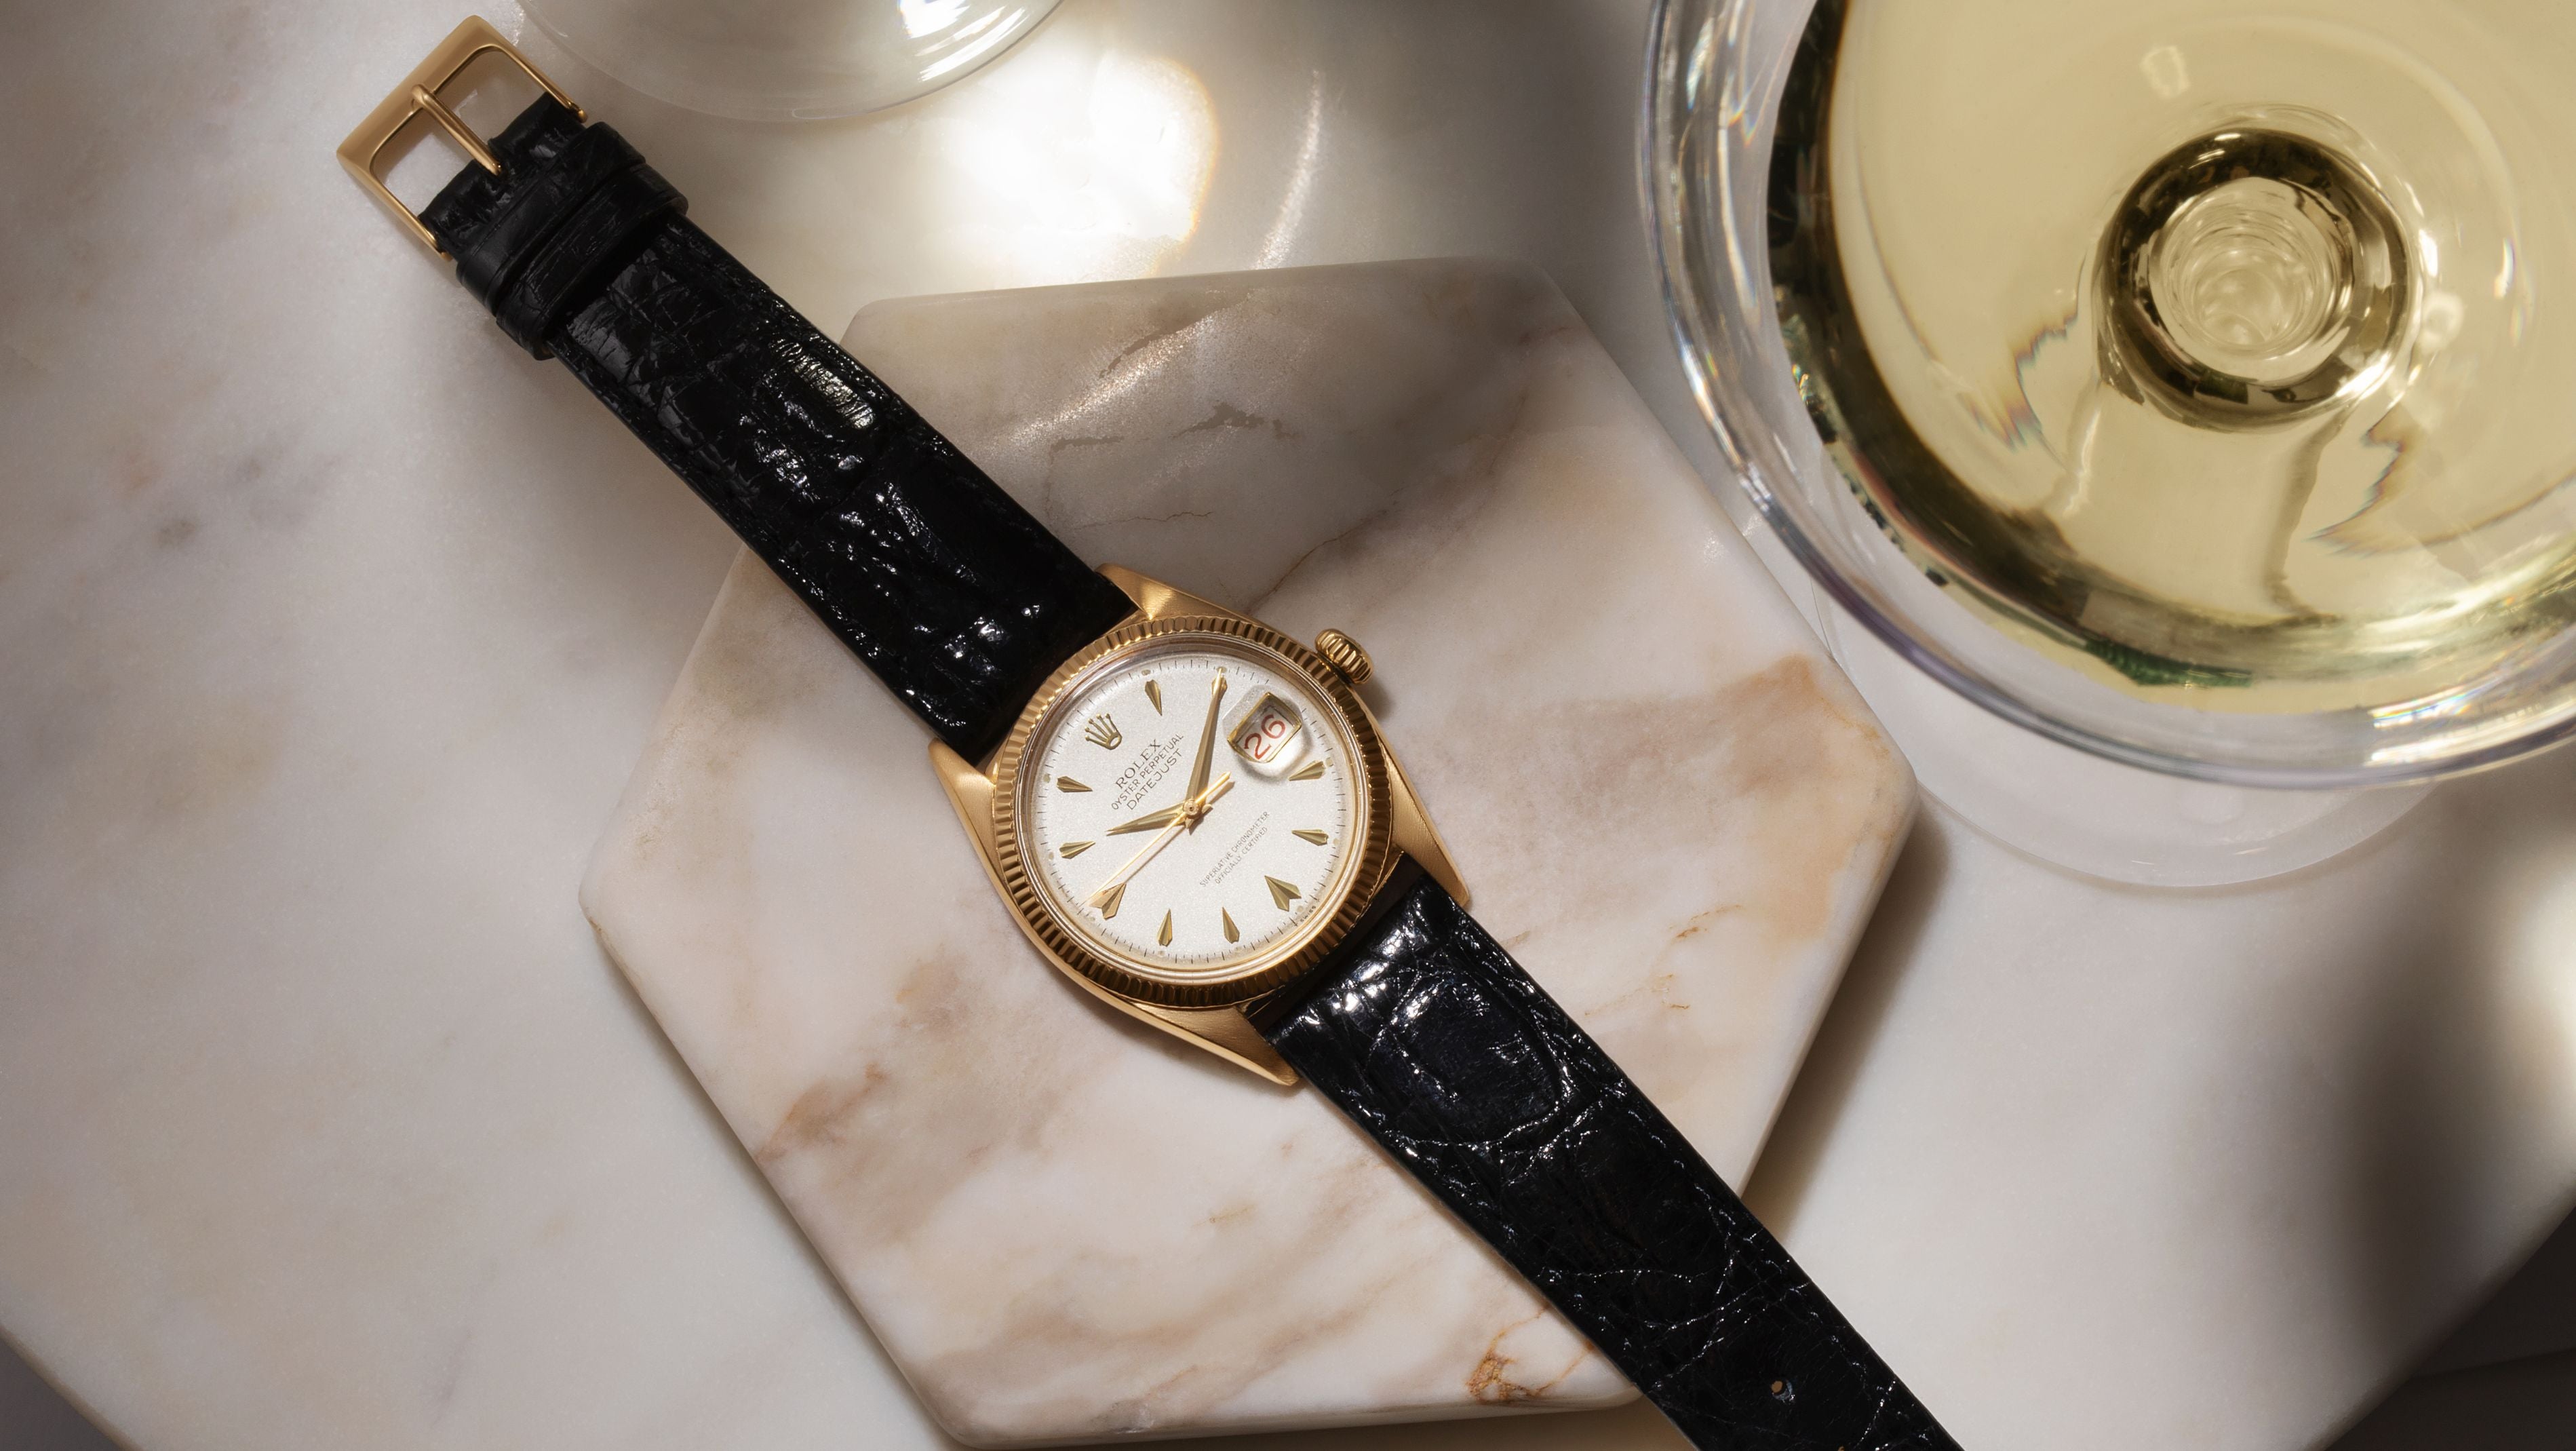 Rolex watch Swiss watch